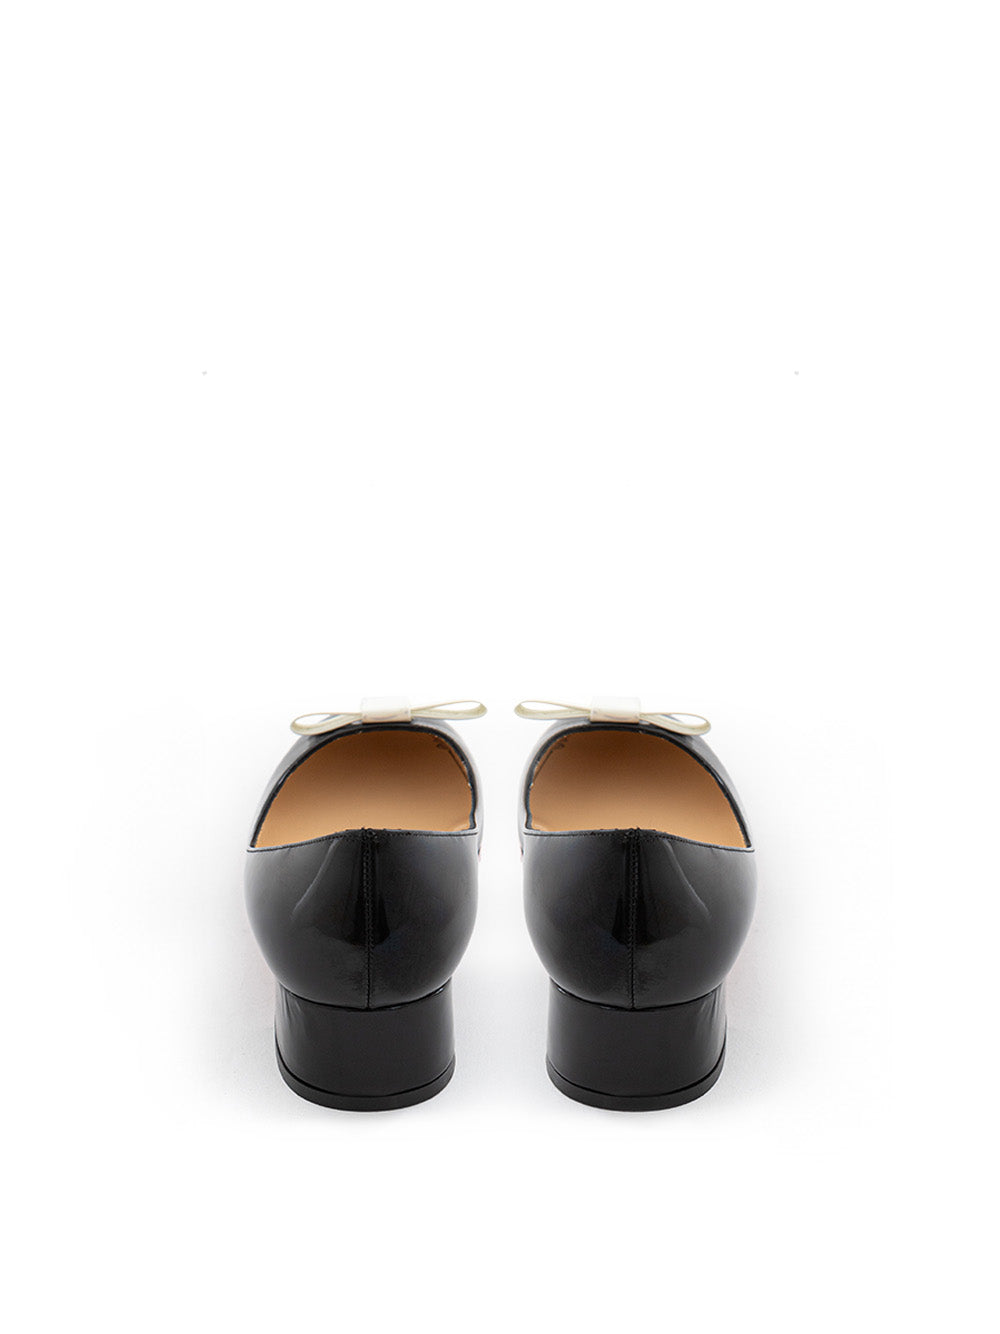 Christian Louboutin Elegant Black Patent Leather Ballet Flats